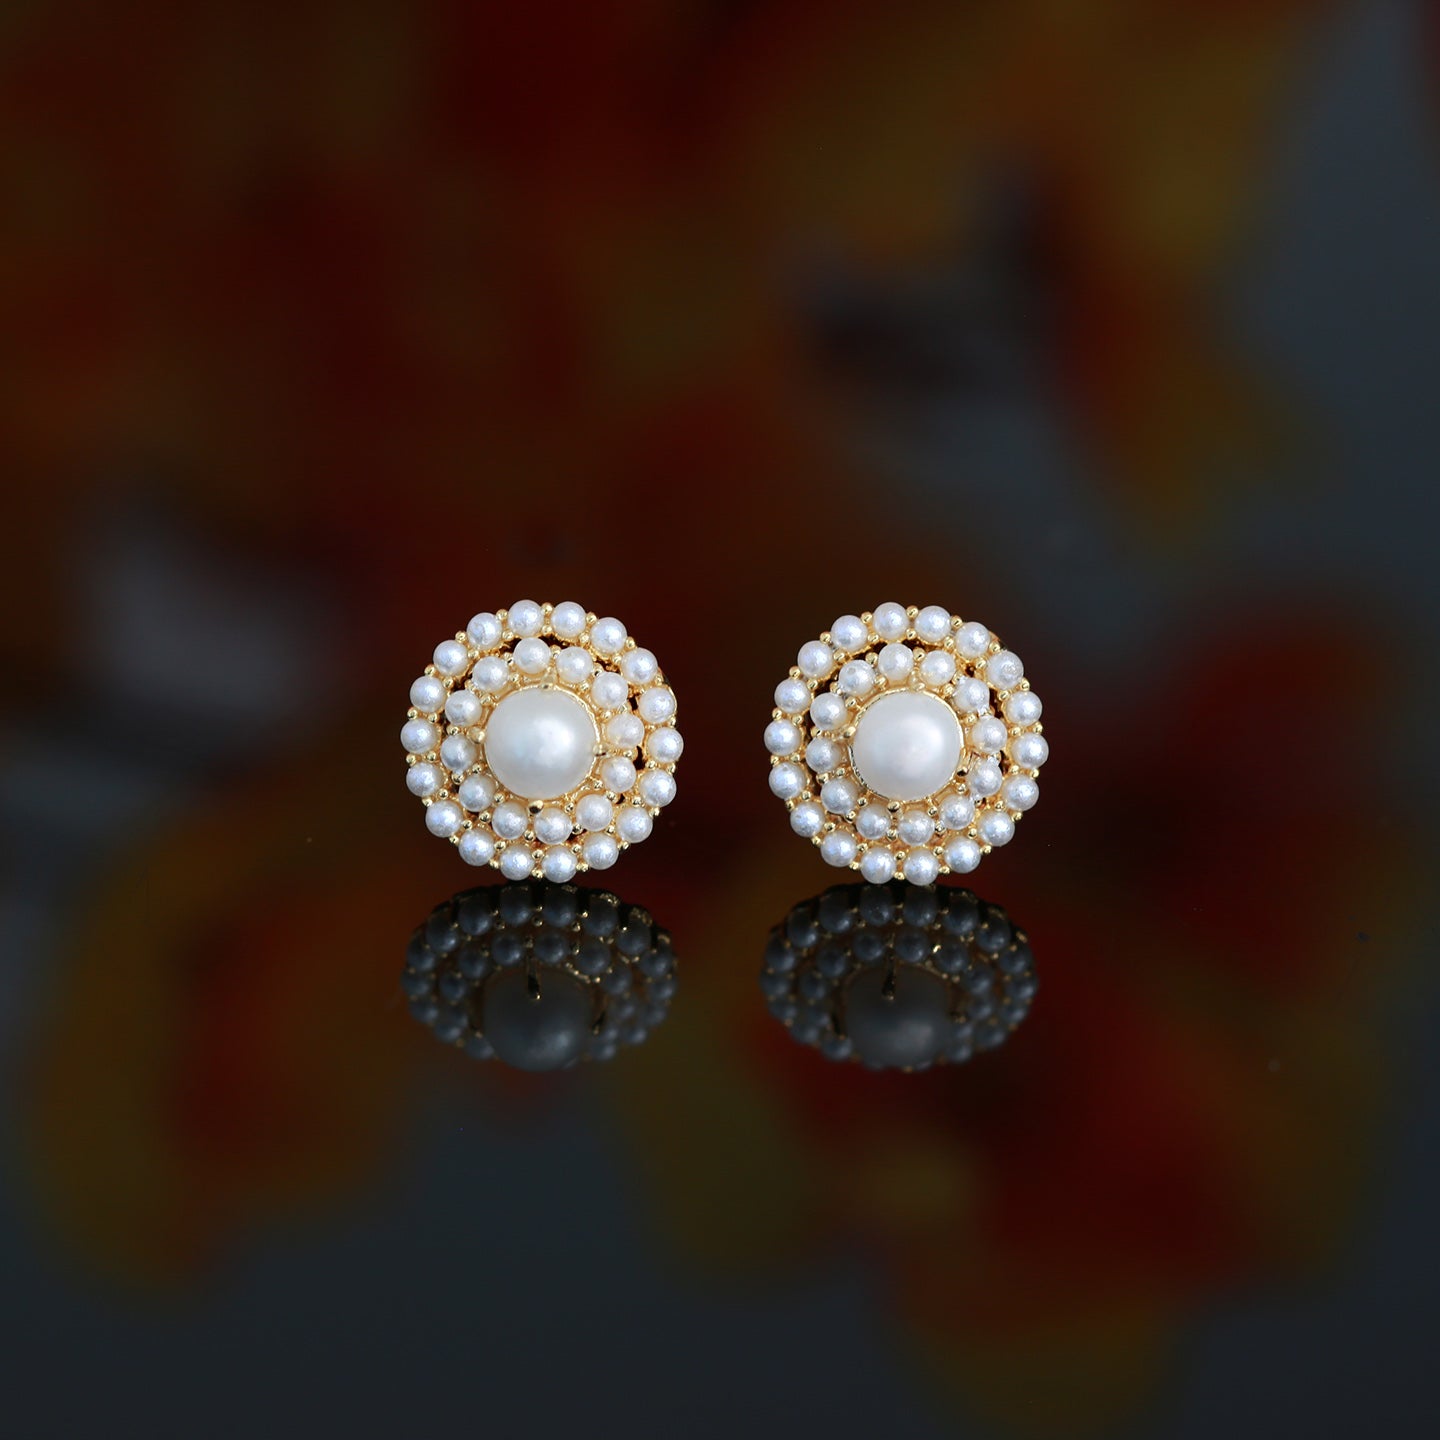 Classic 18K Gold Fashion Genuine Pearl stud Earrings for women | Handmade Real Pearl Flower Earrings tops | Gift For her